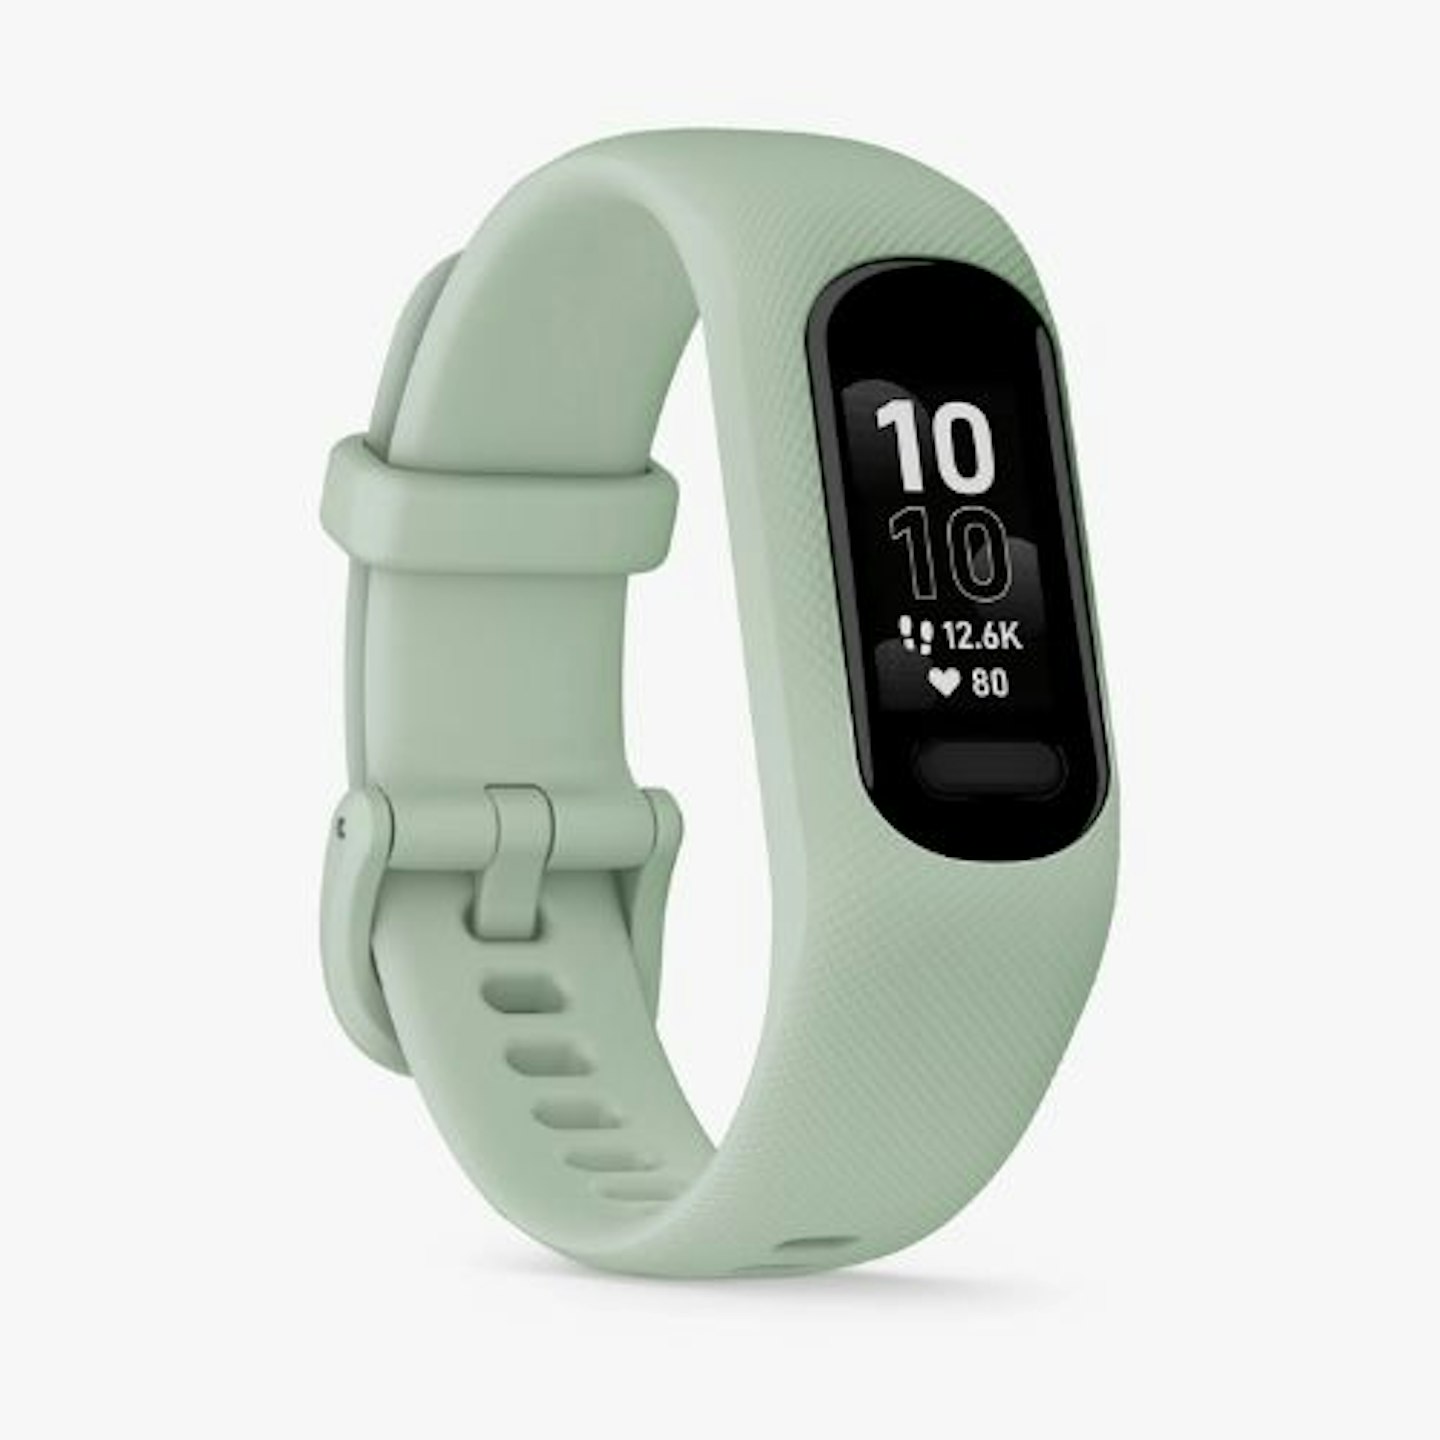 vivosmart 5 Fitness Activity Tracker with Wrist Based Heart Rate, Small/Medium, Mint